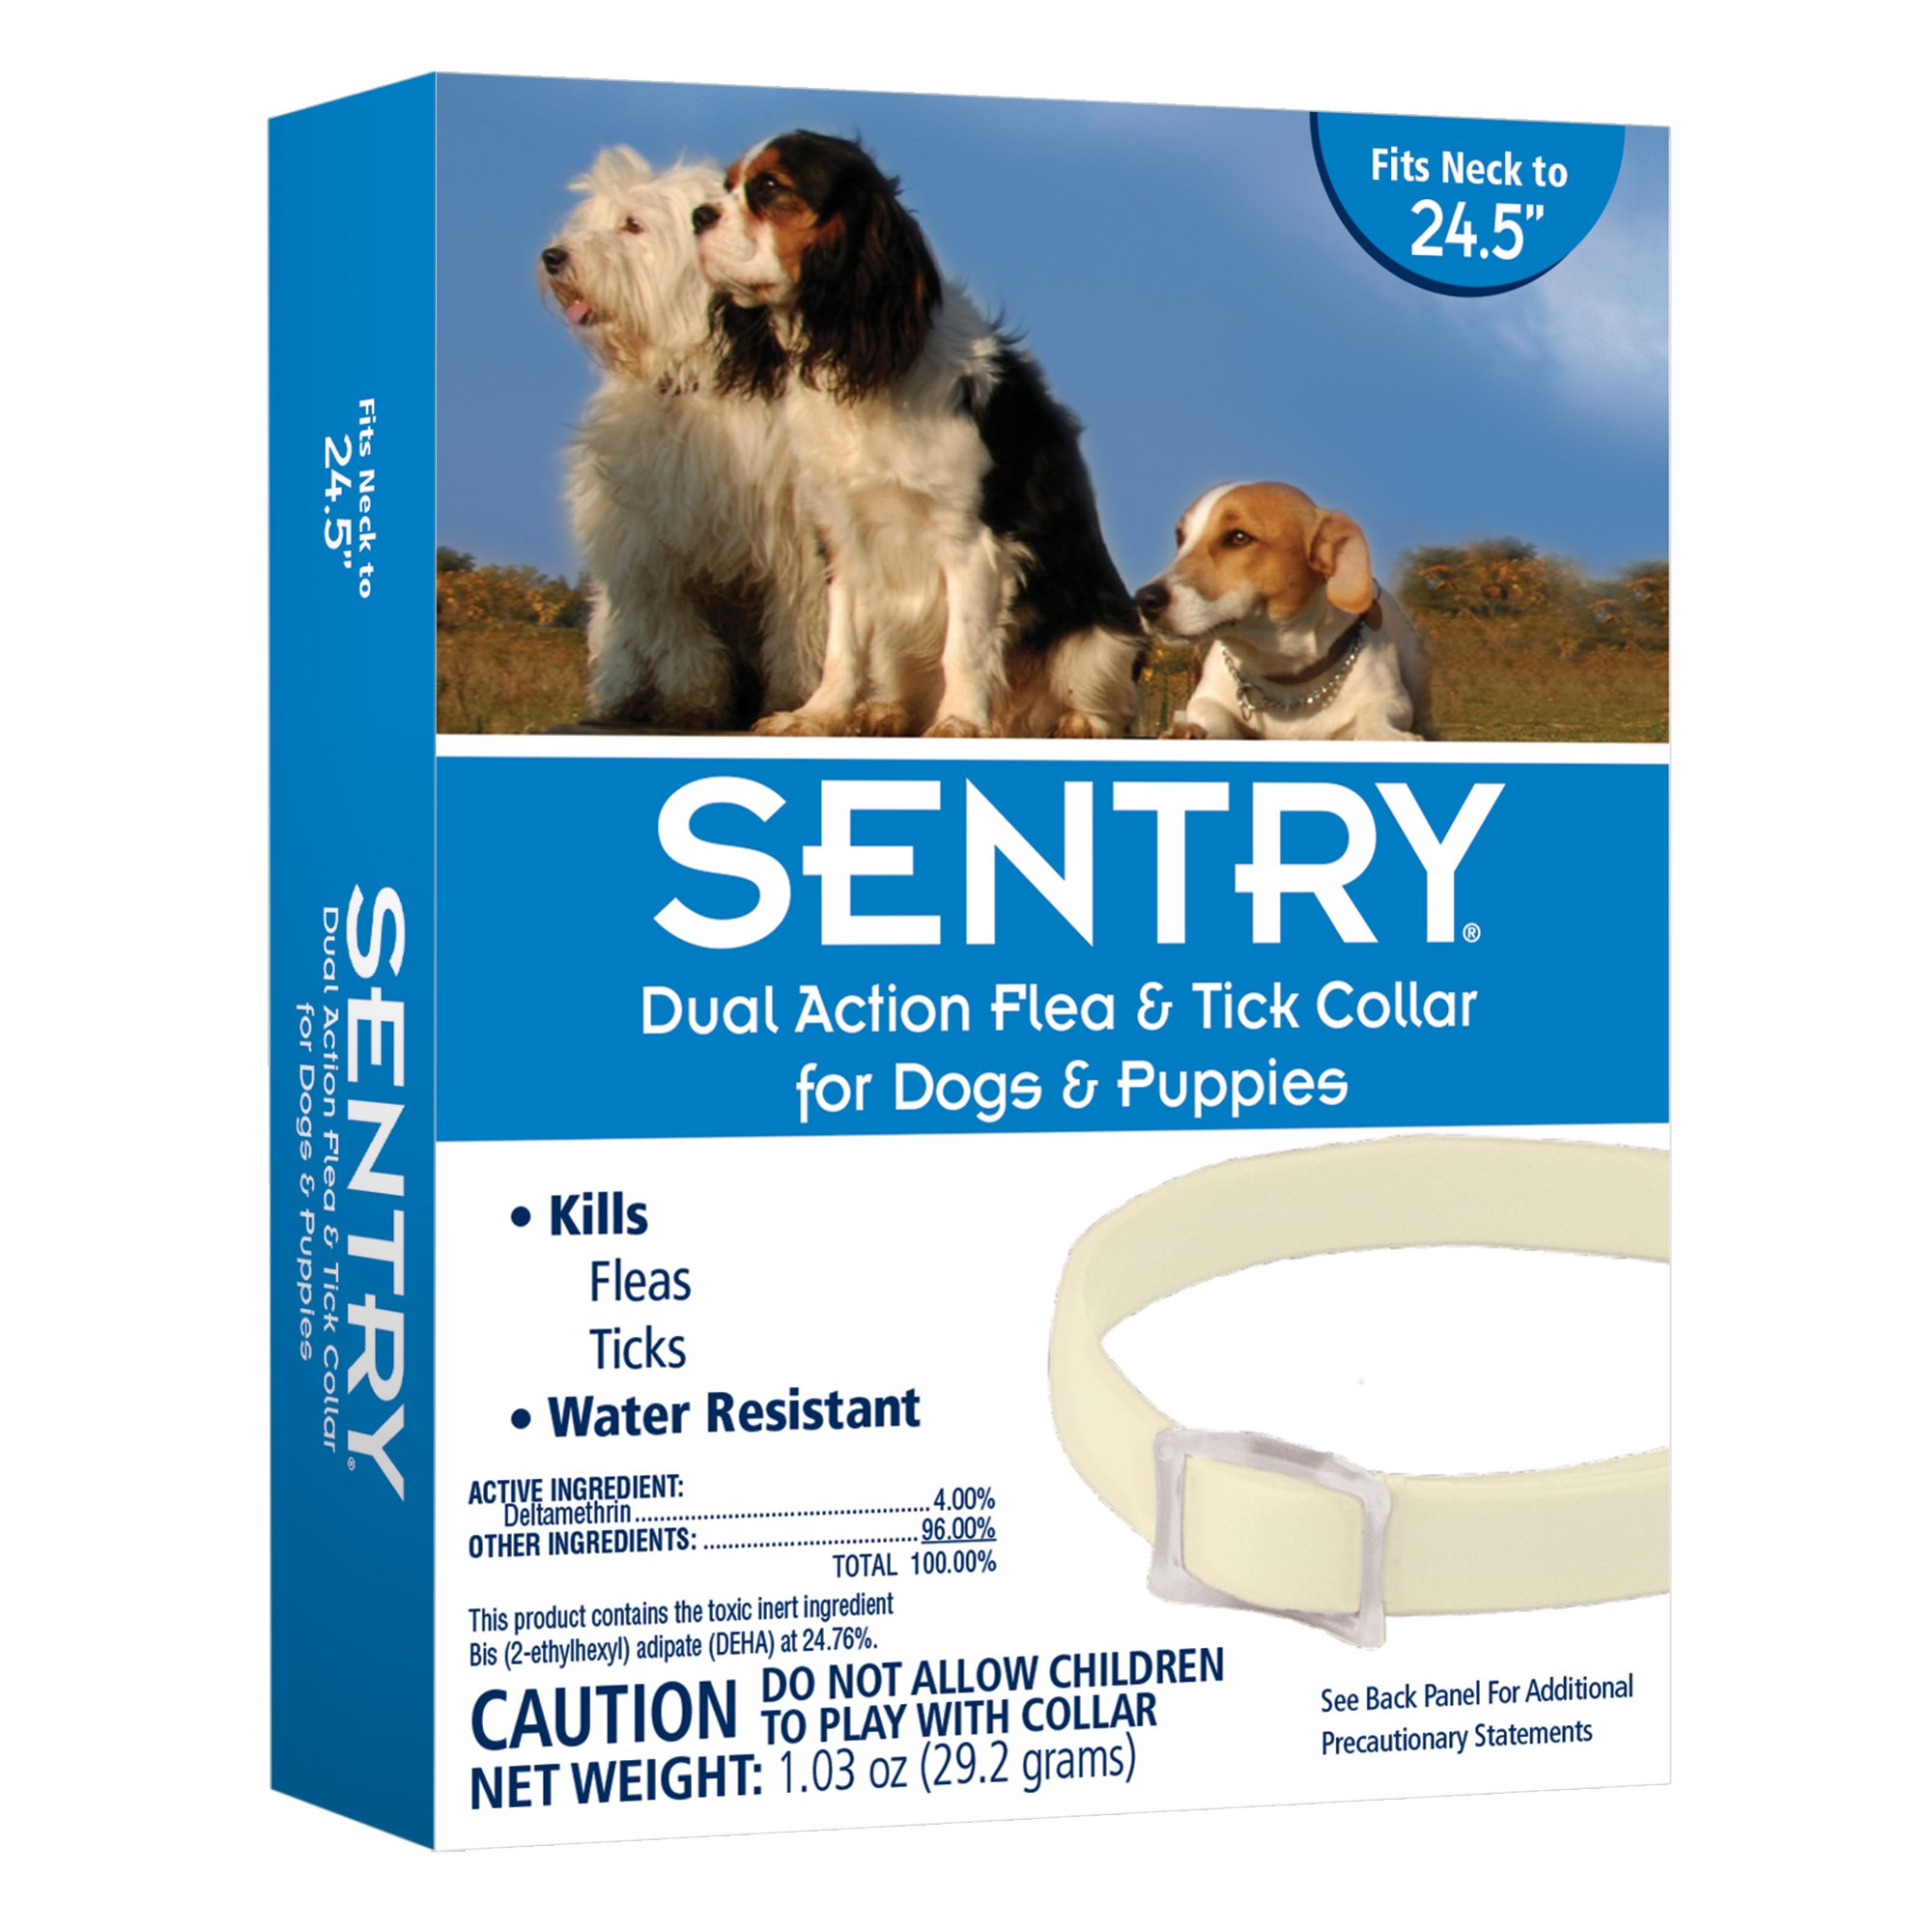 Sentry Dual Action Flea & Tick Collar for Dogs | Petco